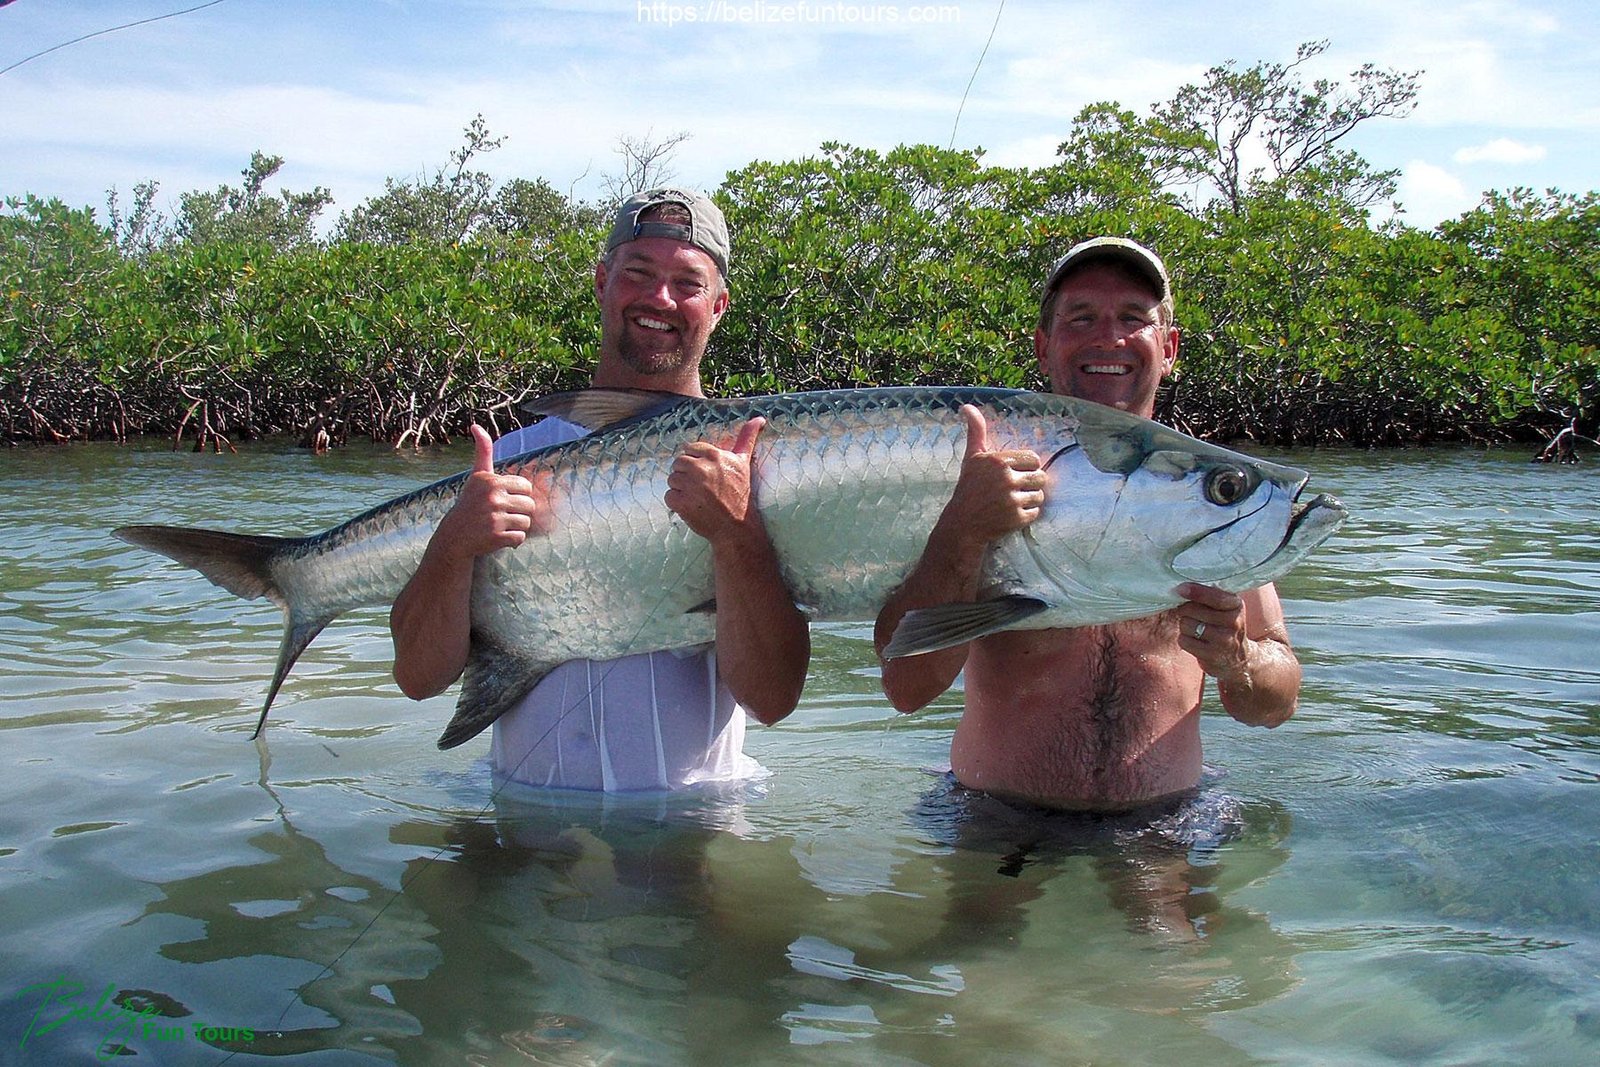 Sport Fishing in Belize, The sport fisherman’s paradise